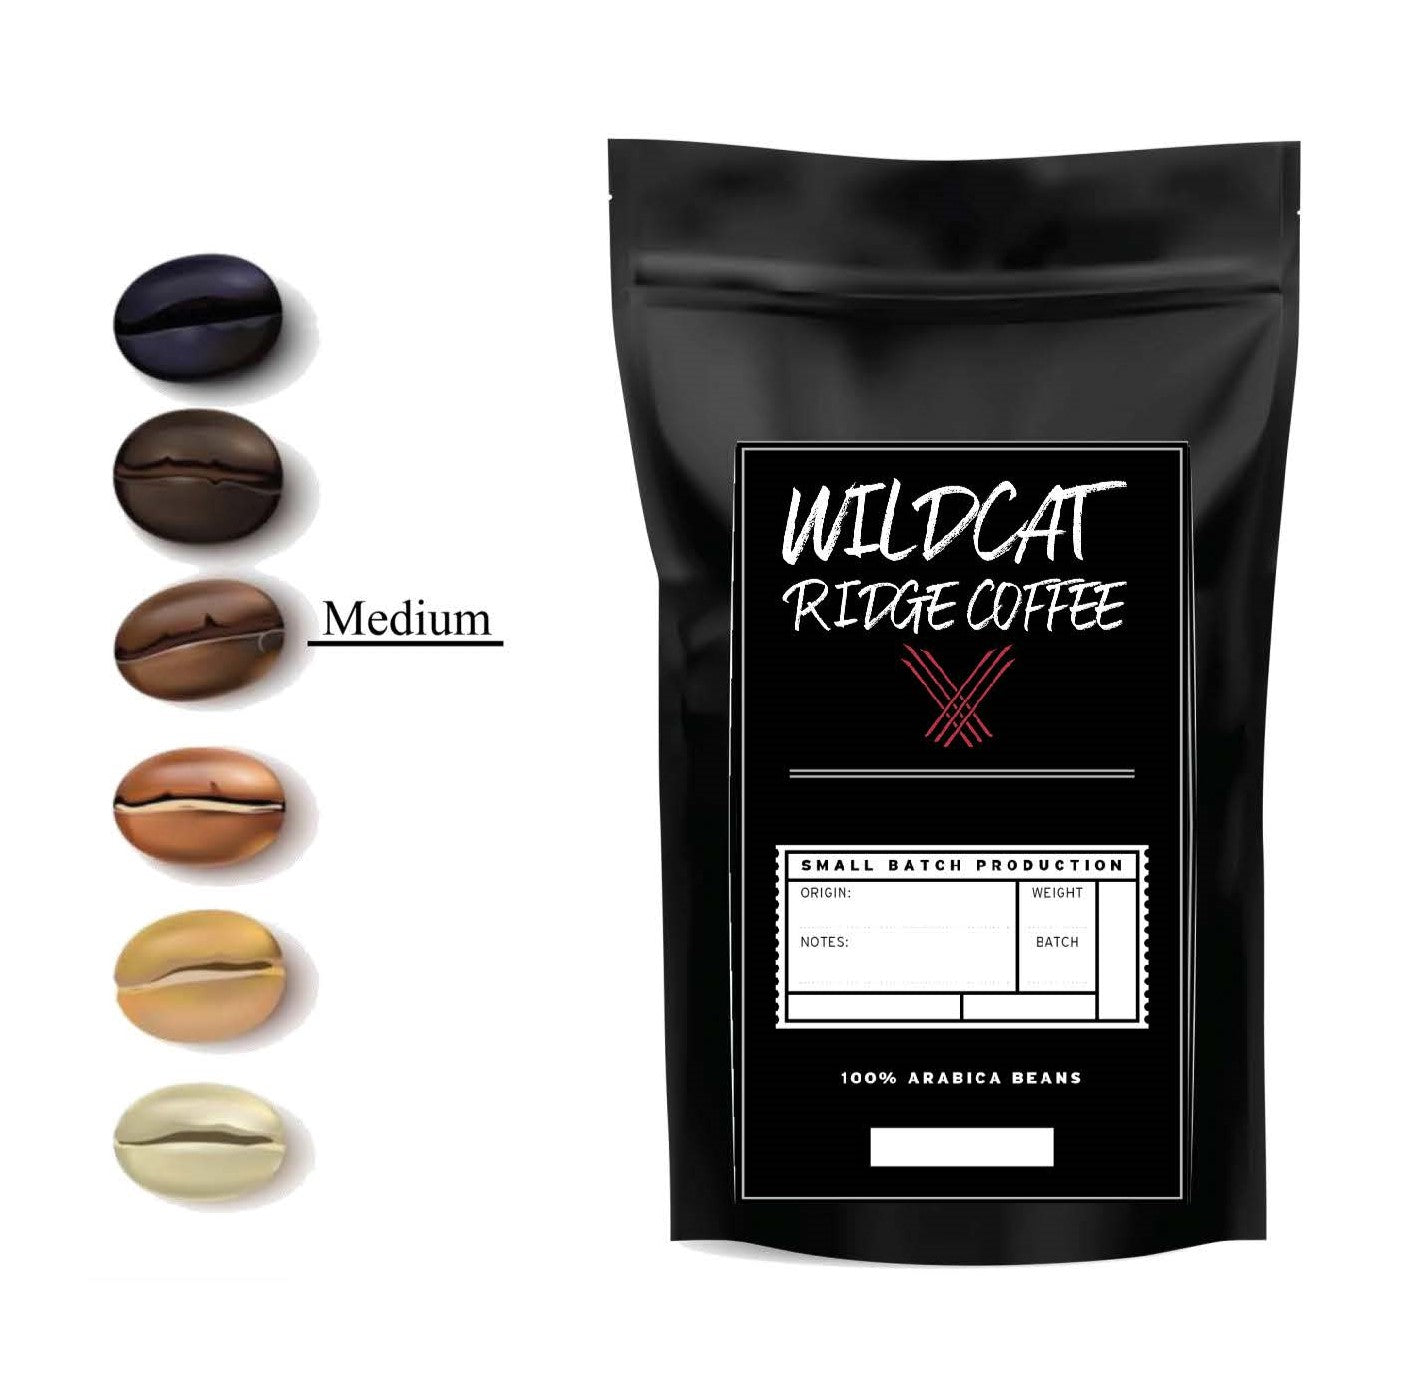 Breakfast Blend - Wildcat Ridge Coffee Popular Blends